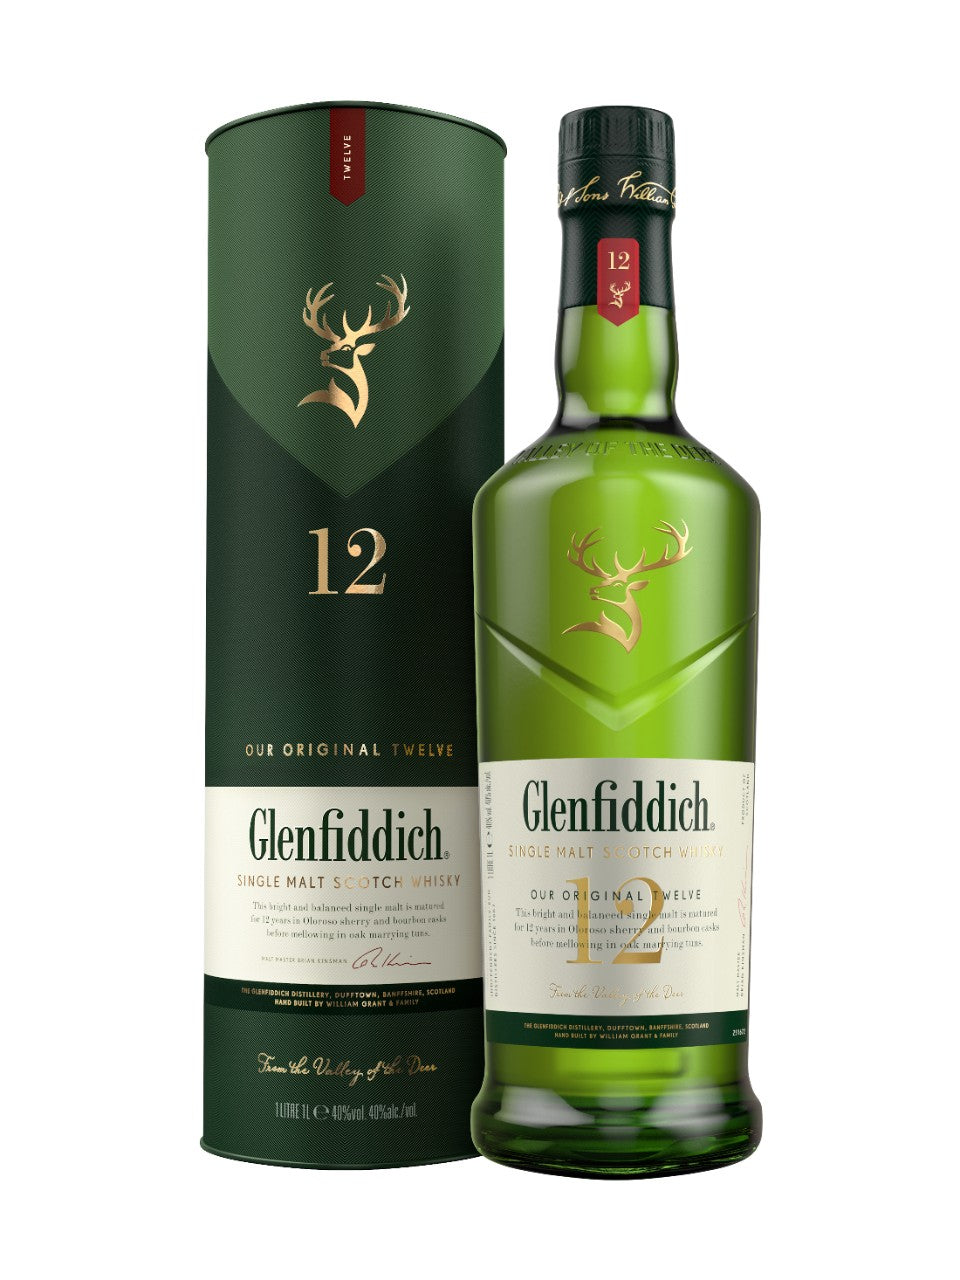 Glenfiddich 12 Year Old Single Malt Scotch Whisky 1140 ml bottle